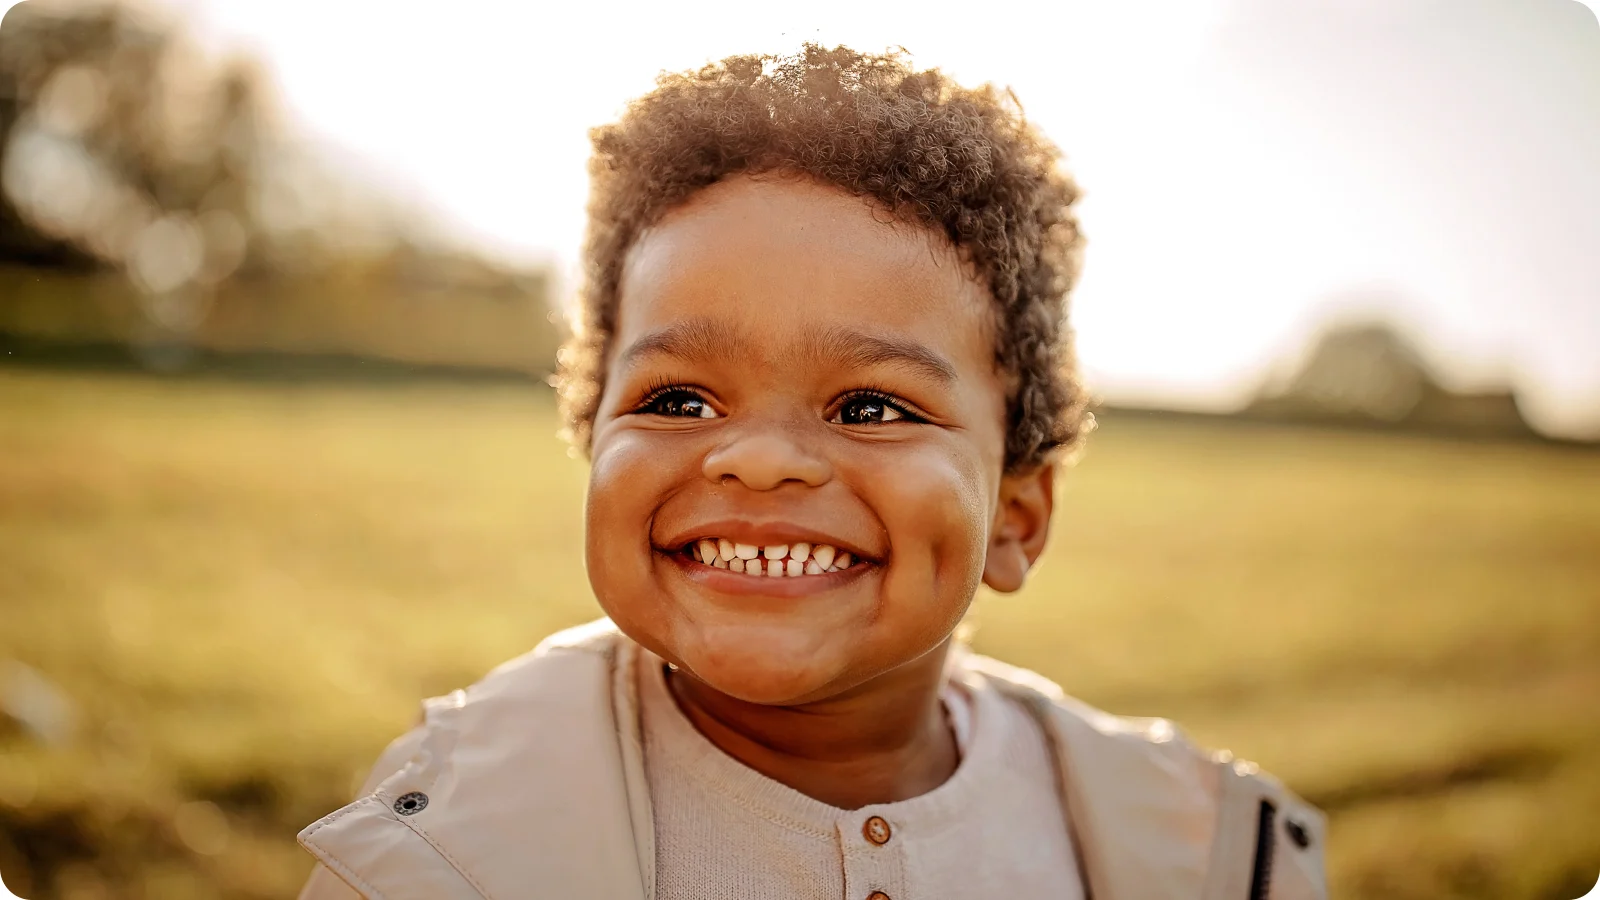 Cute little boy smiling with teeth